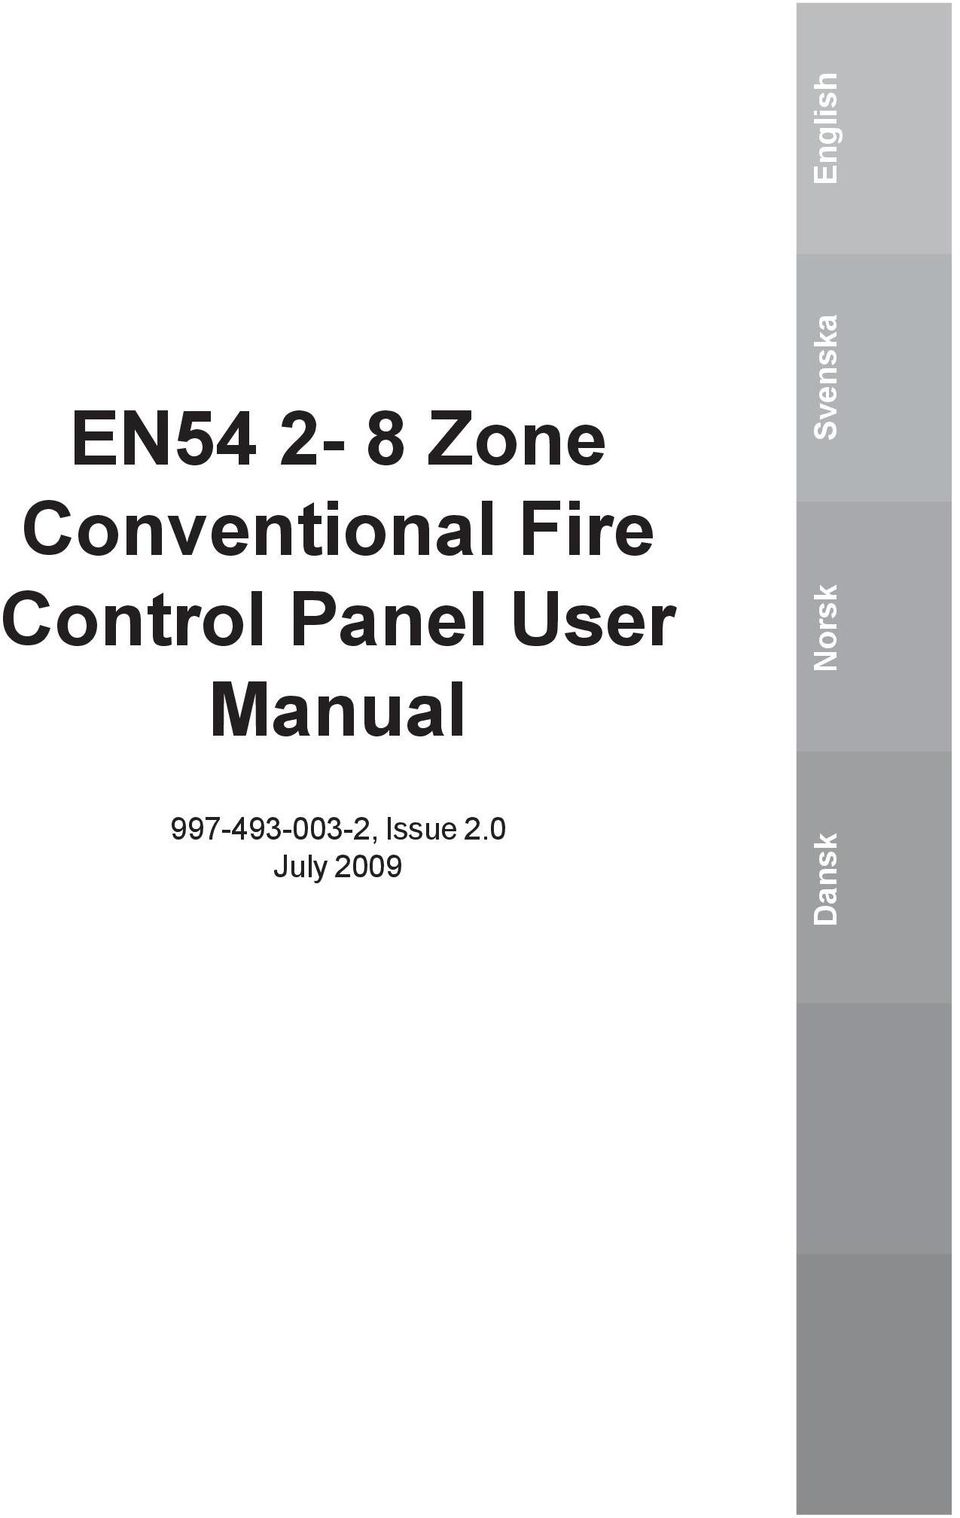 Fire Control Panel User